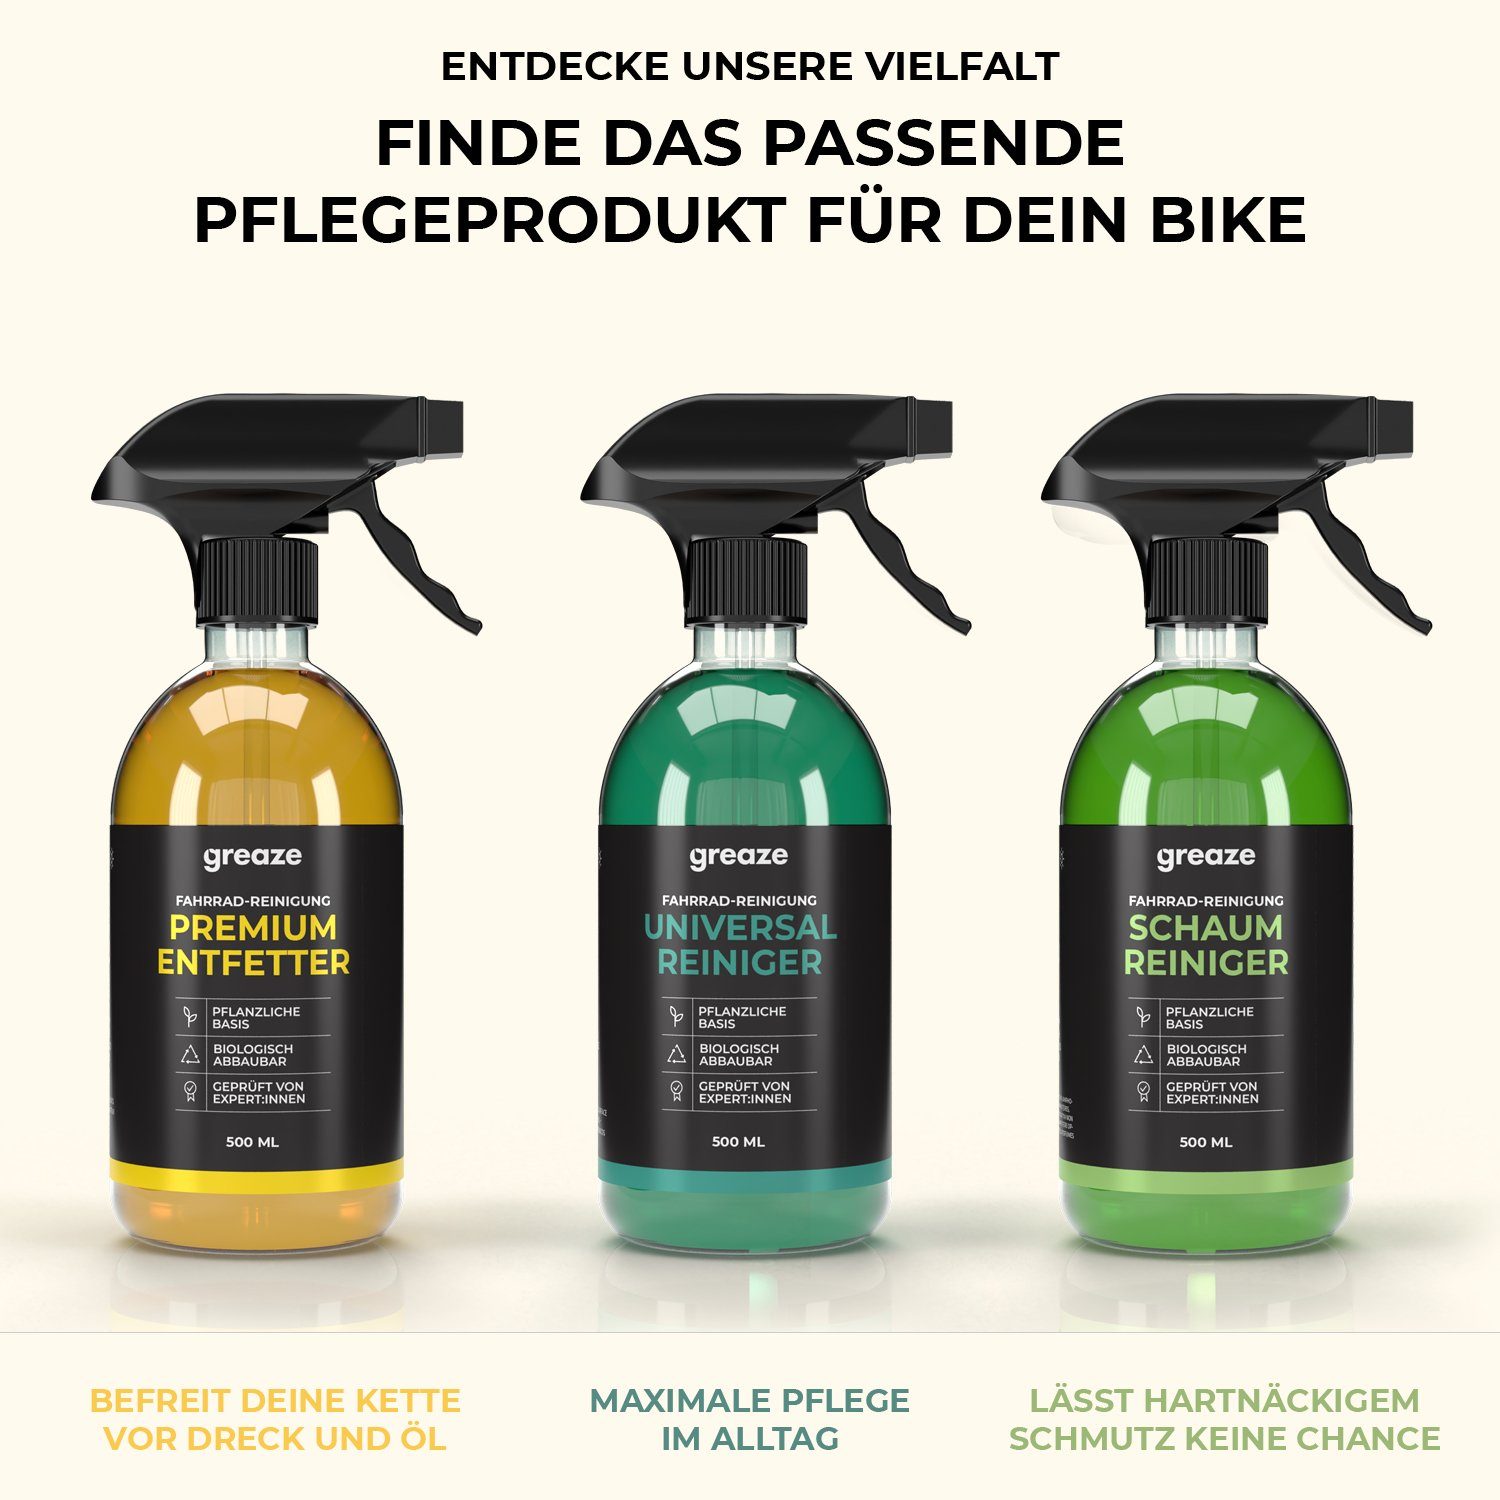 Premium Fahrradketten Entfetter greaze greaze